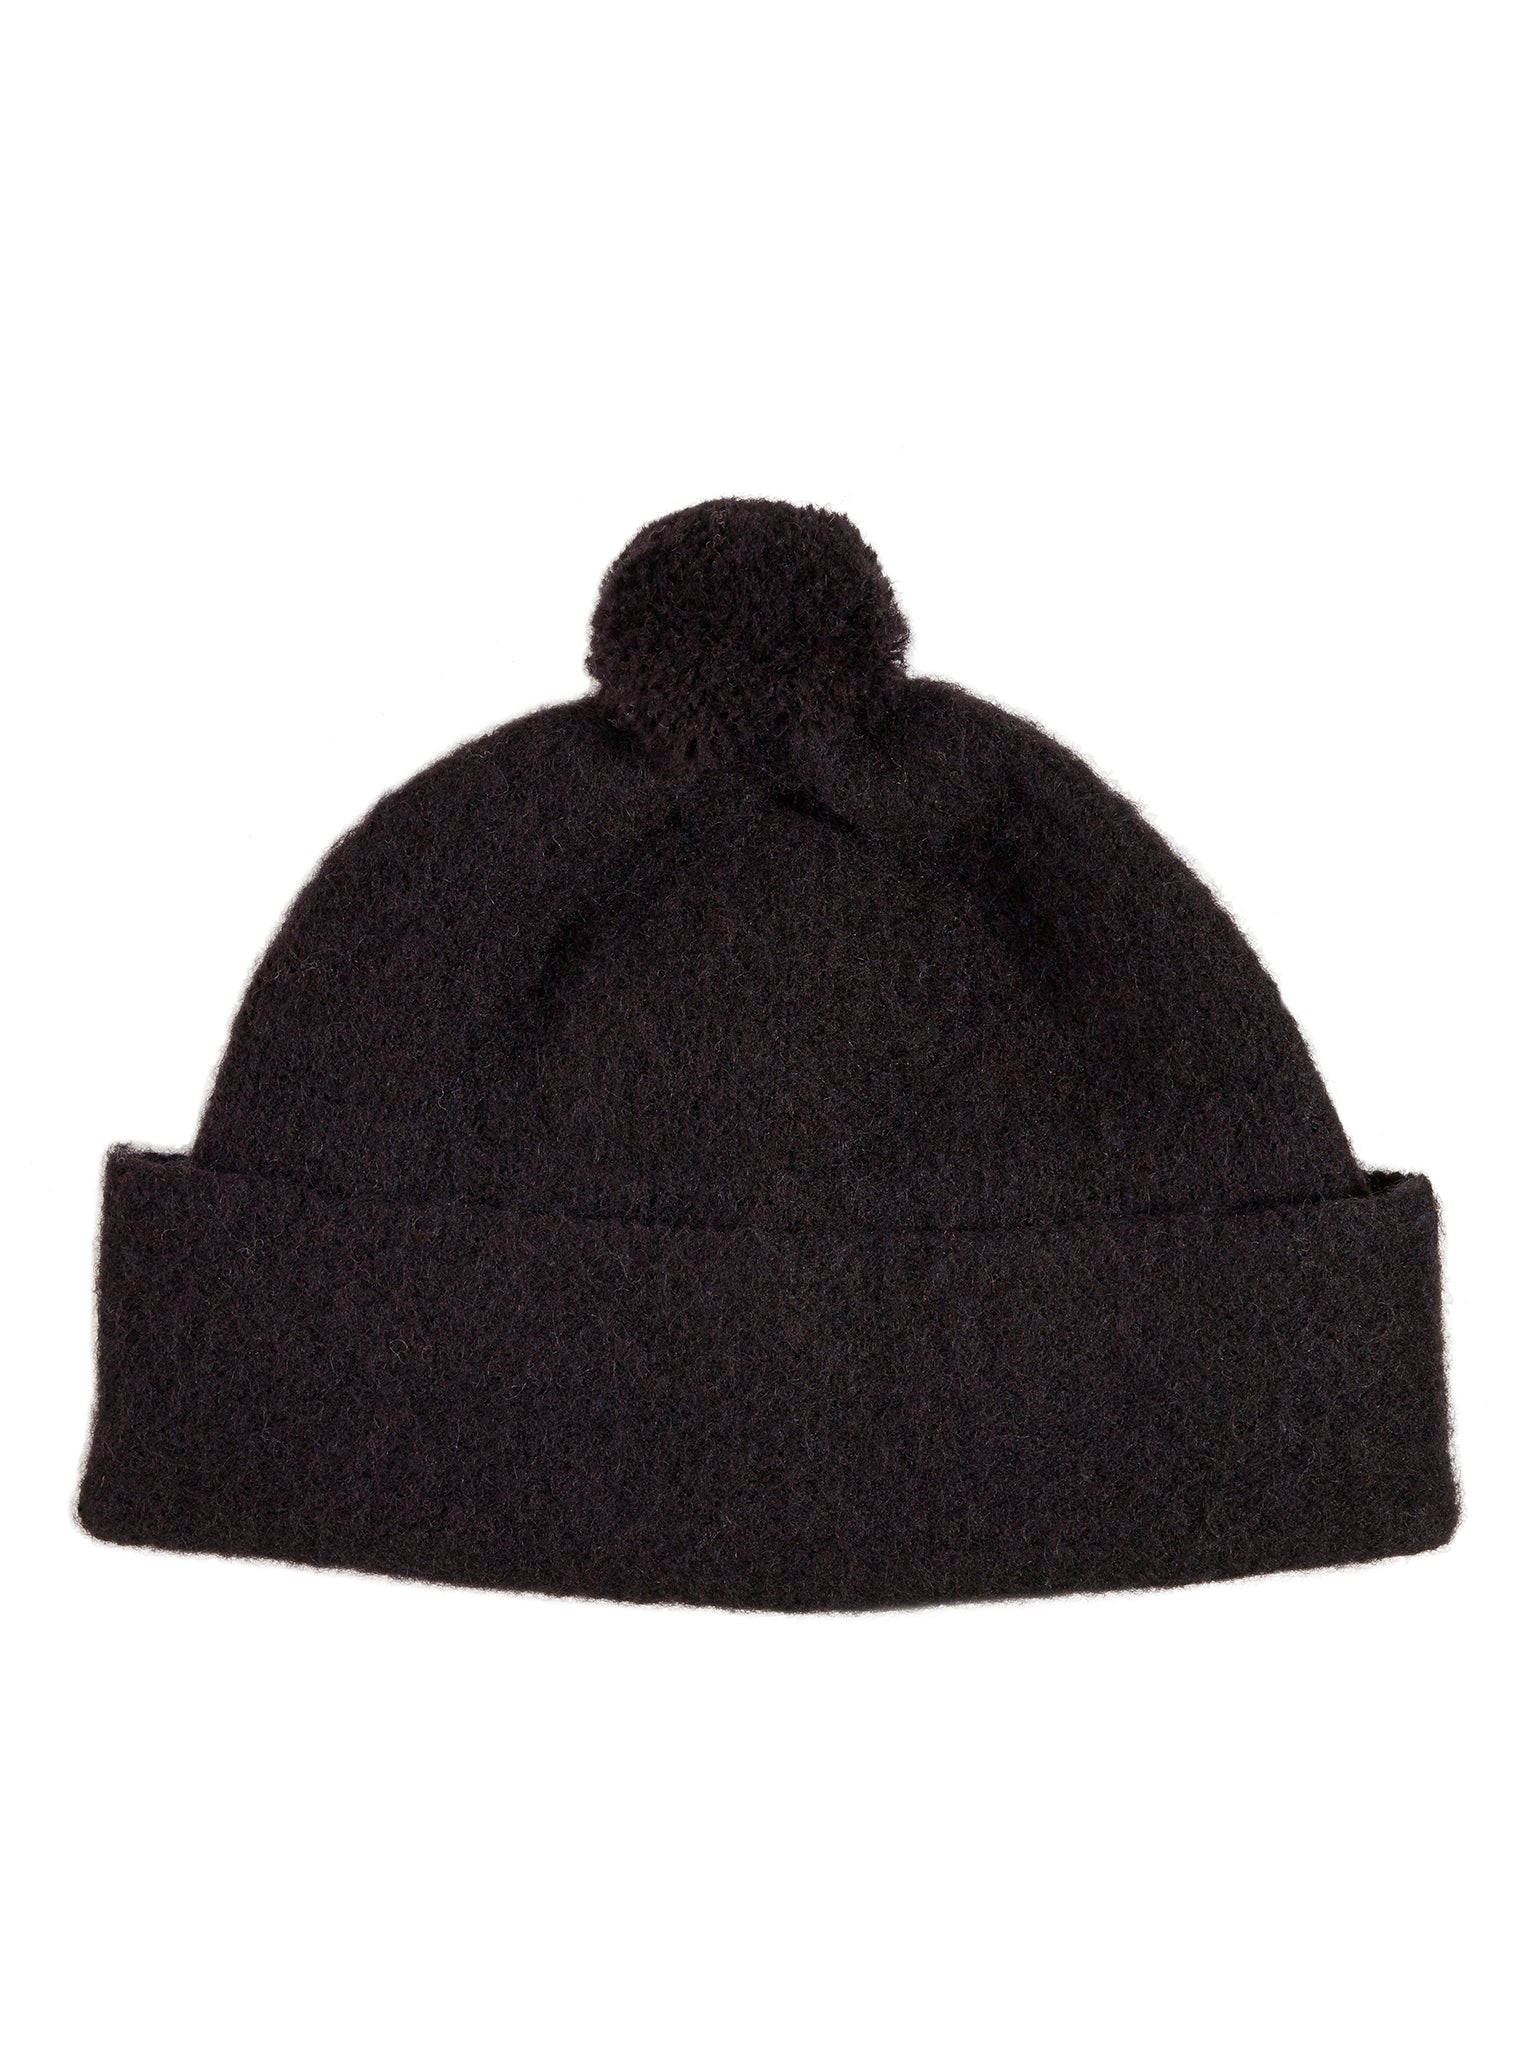 Plain Shetland hat Black Sample Sale